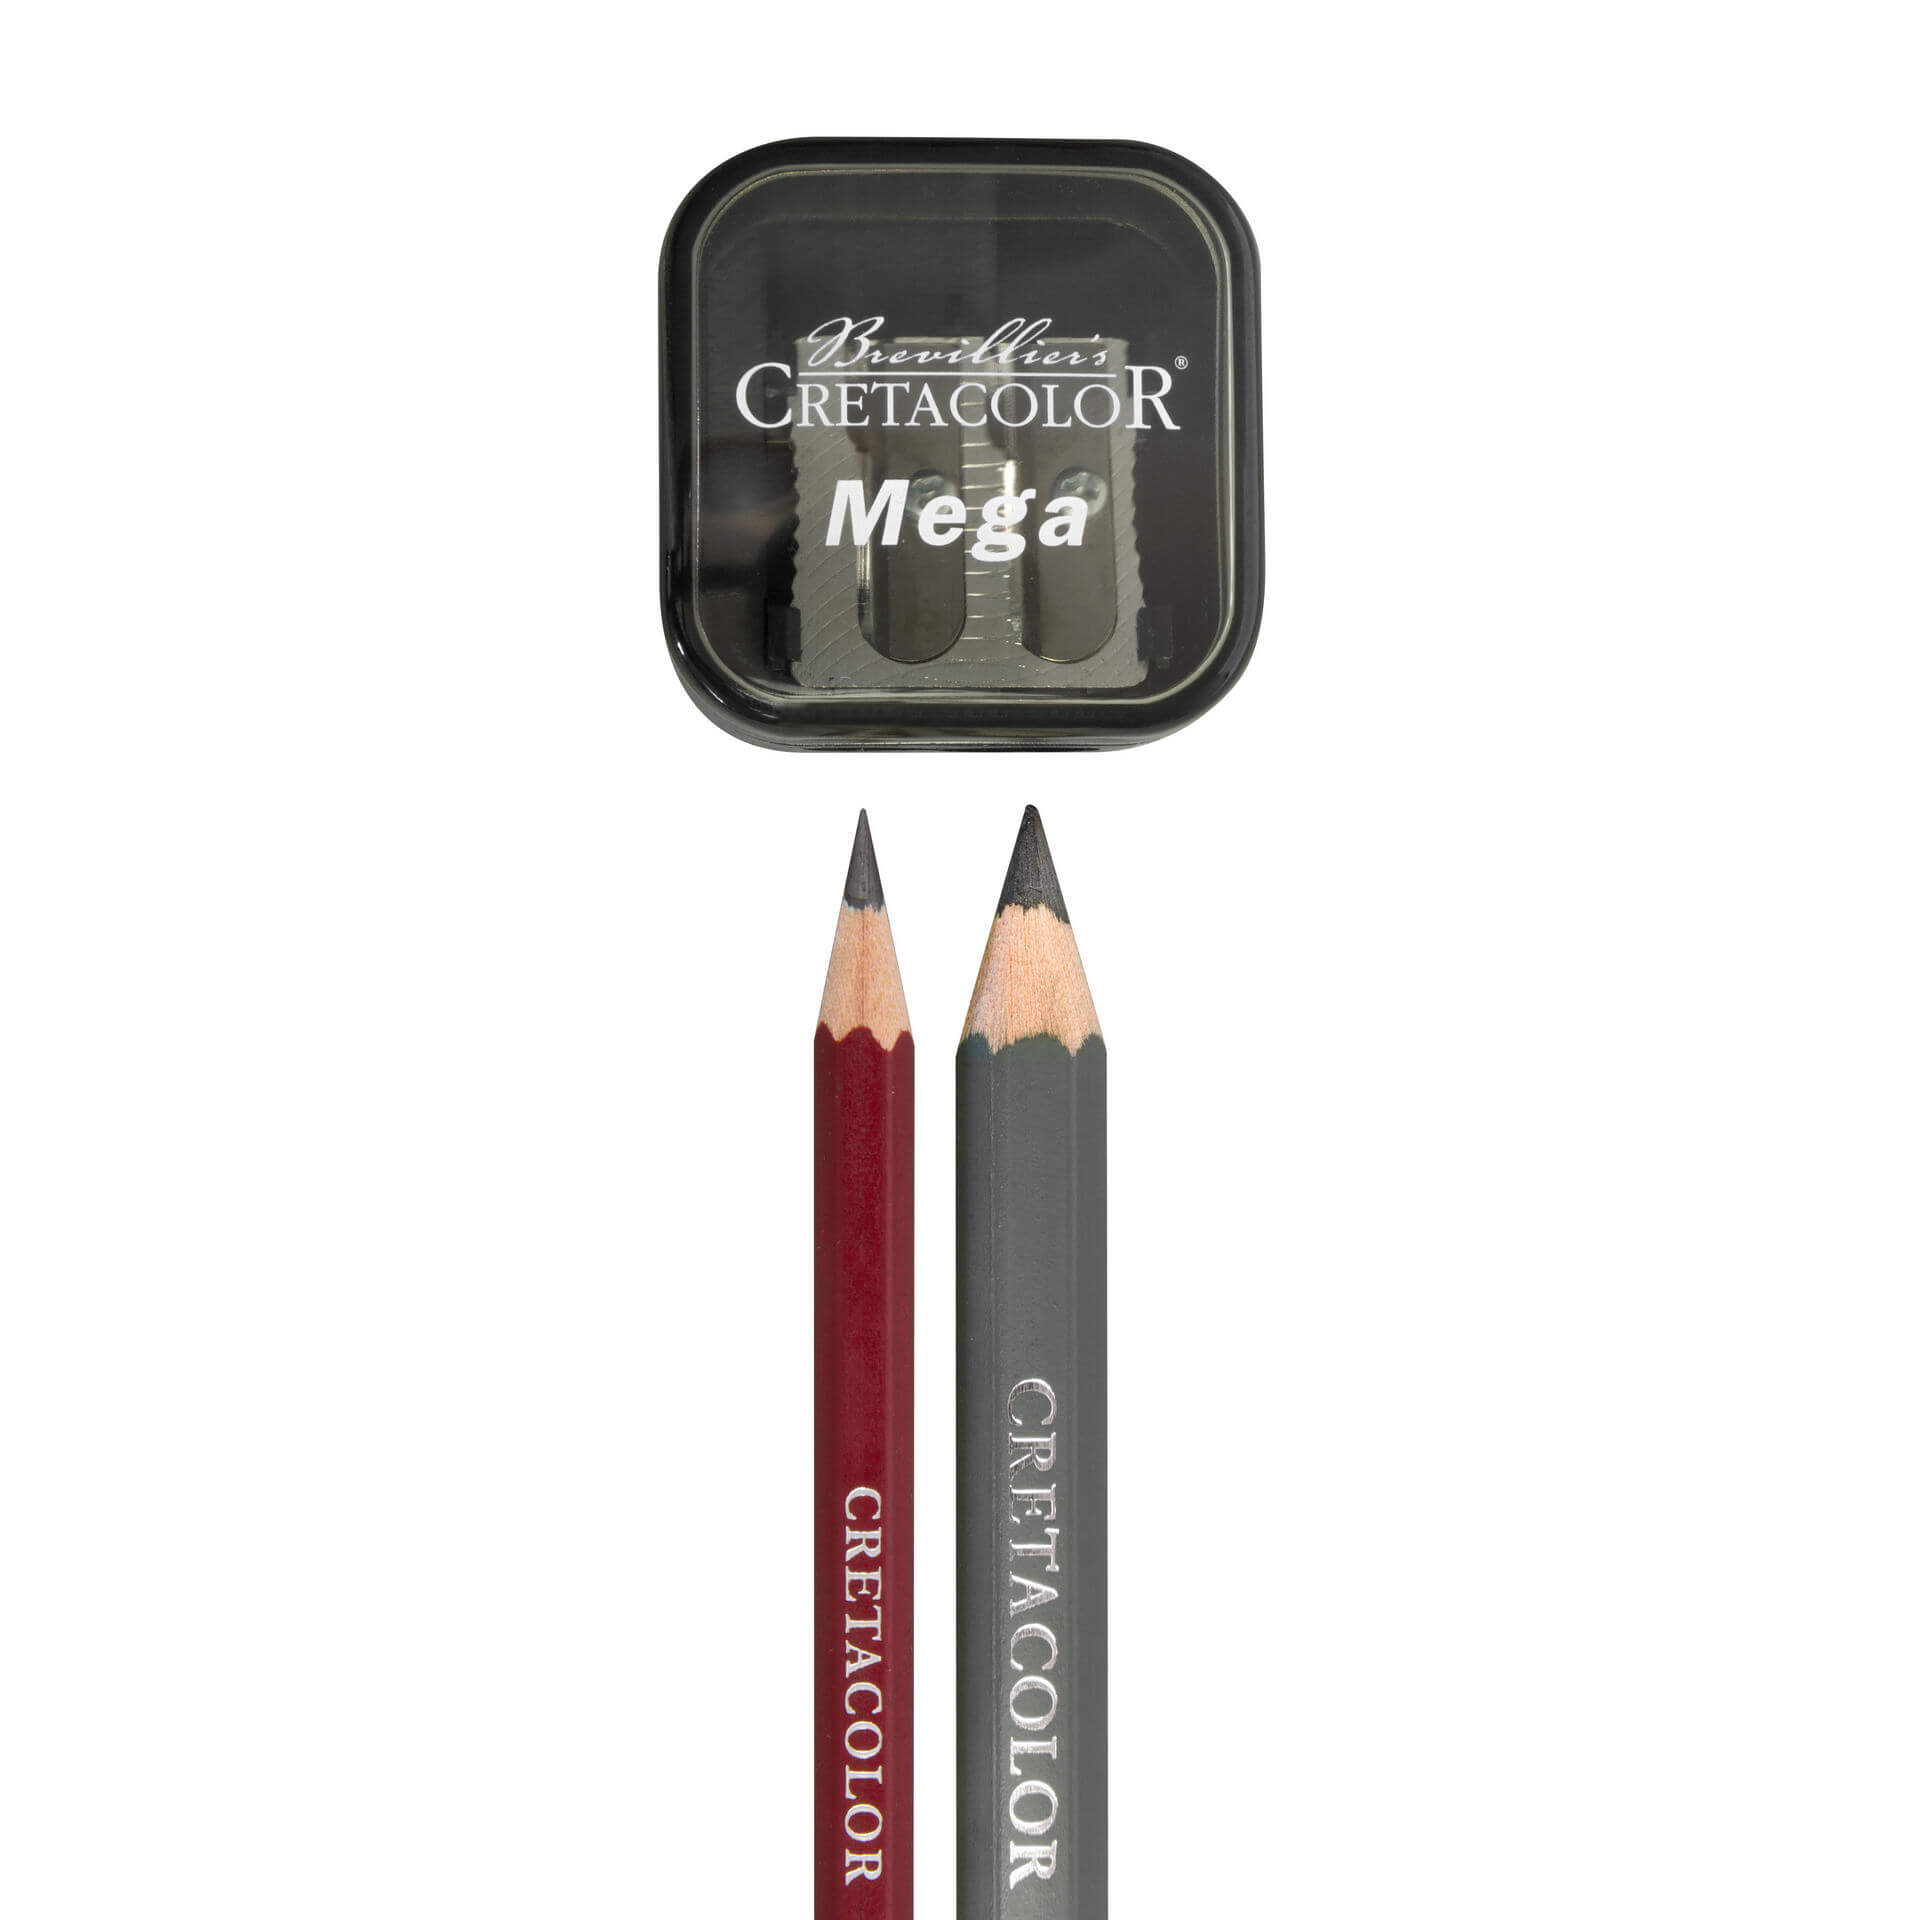 Cretacolor Mega Duo Pencil Sharpener – St. Louis Art Supply